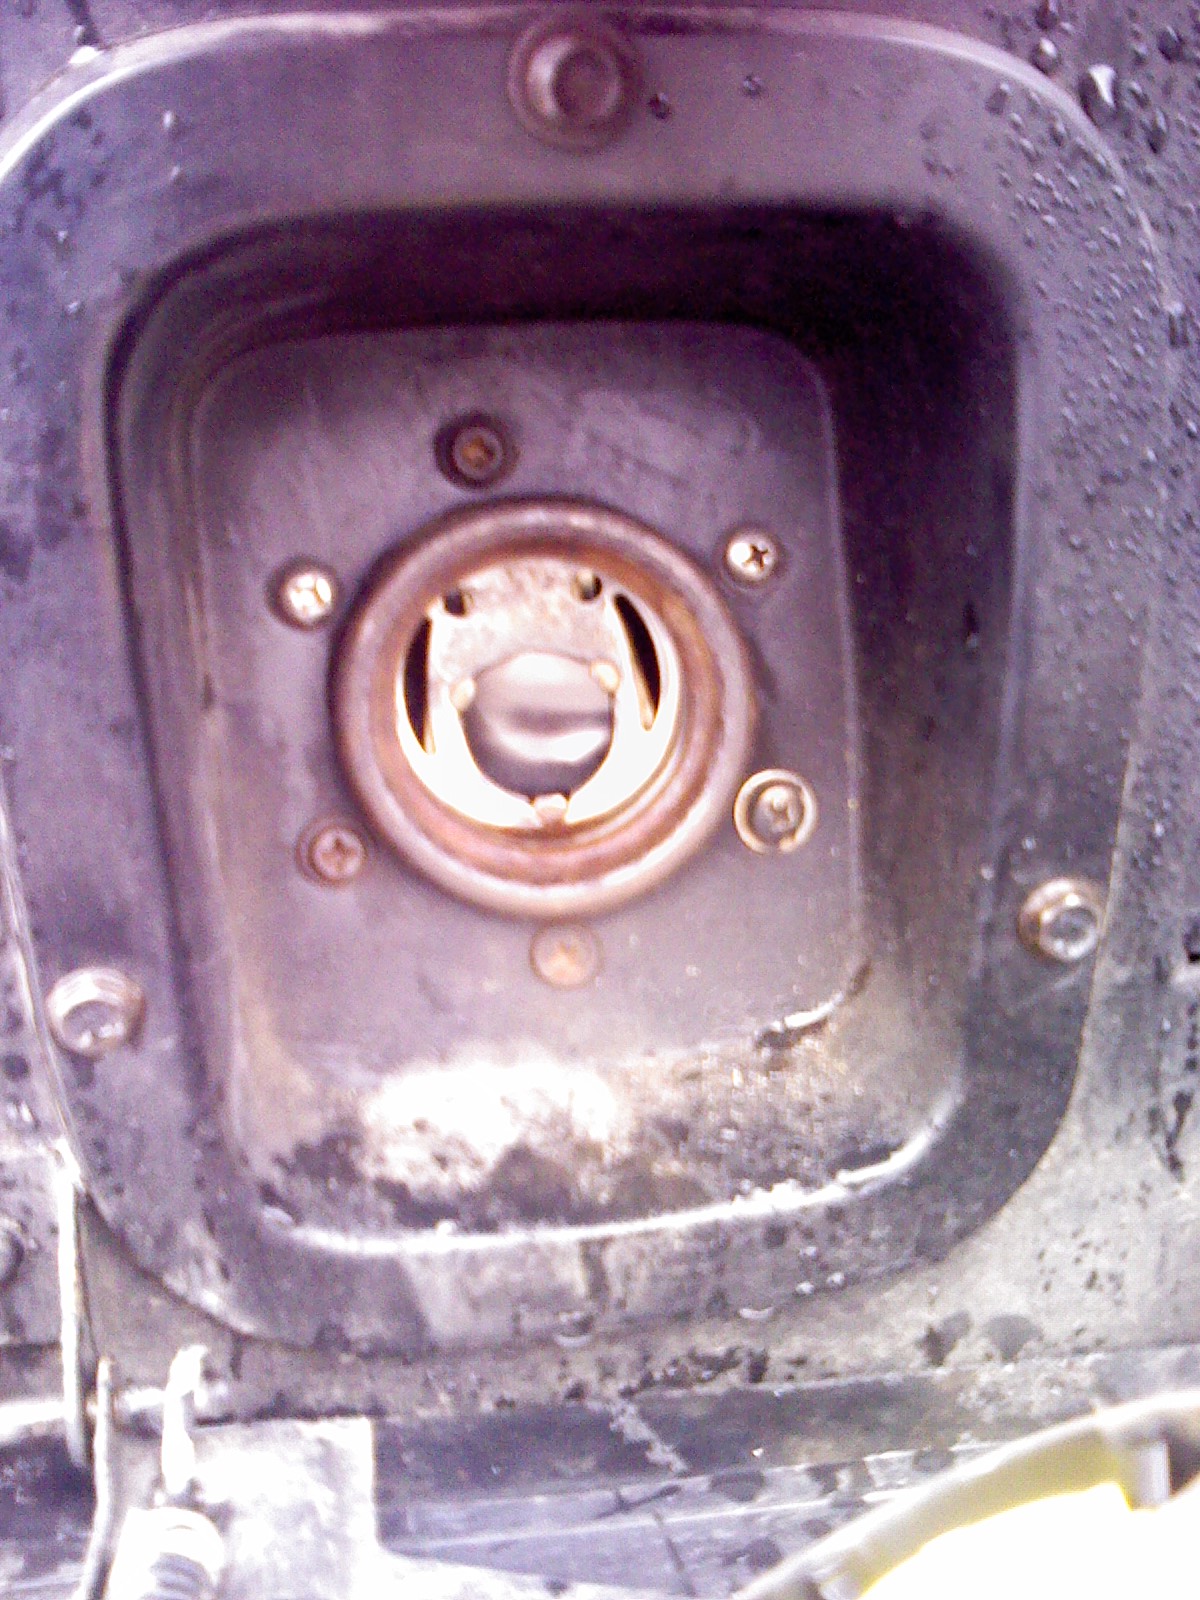 Jeep yj fuel tank removal #1